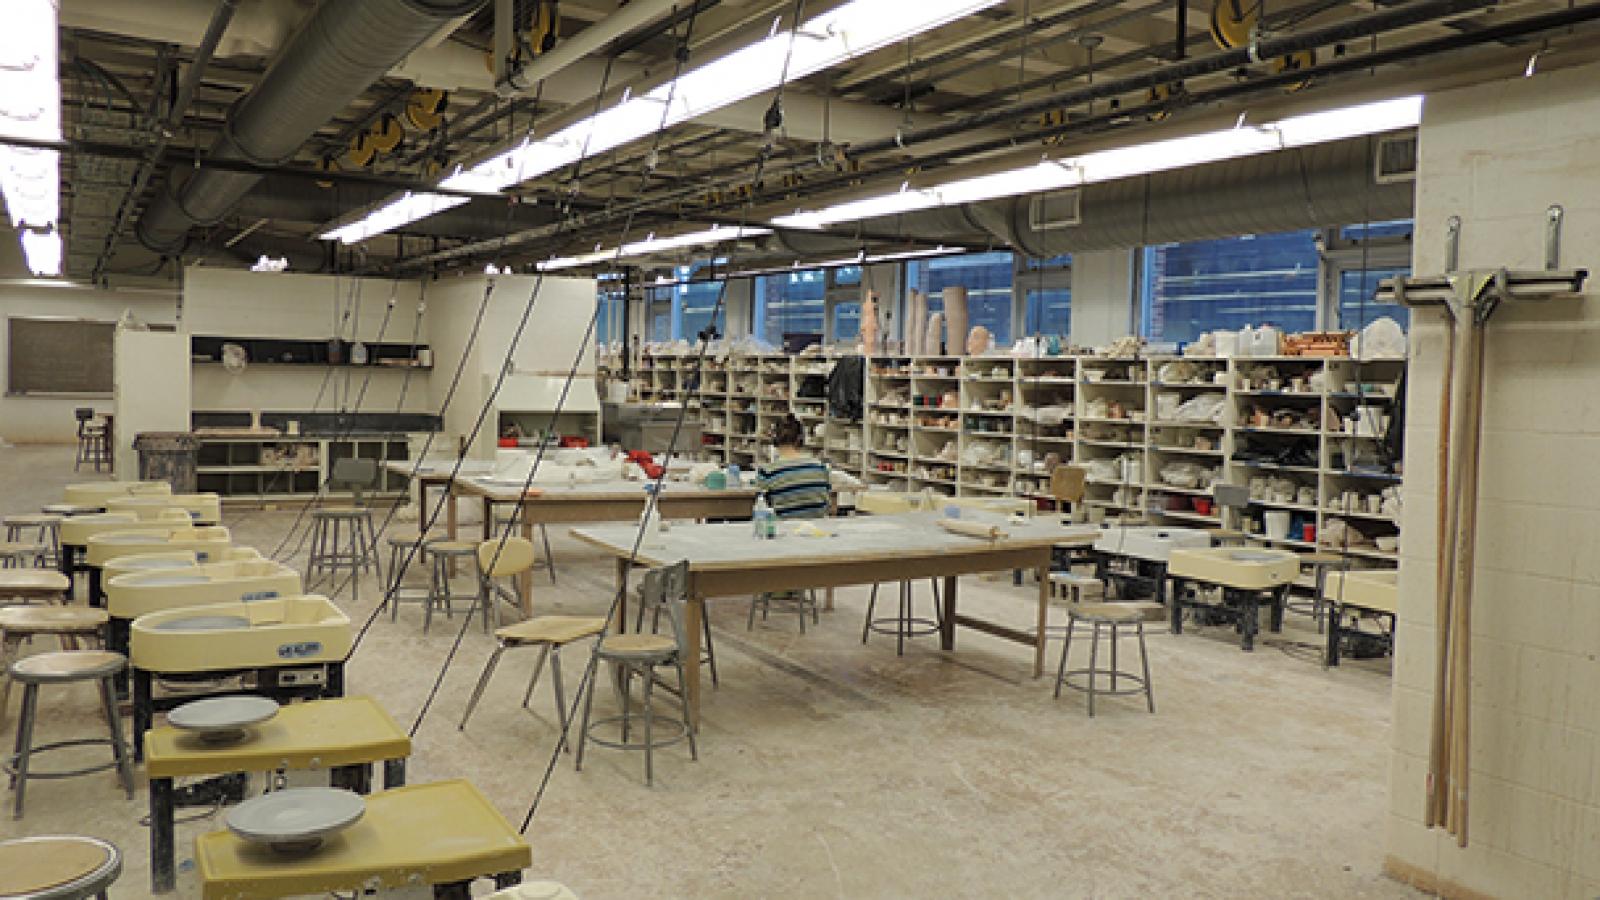 Ceramics studio and classroom